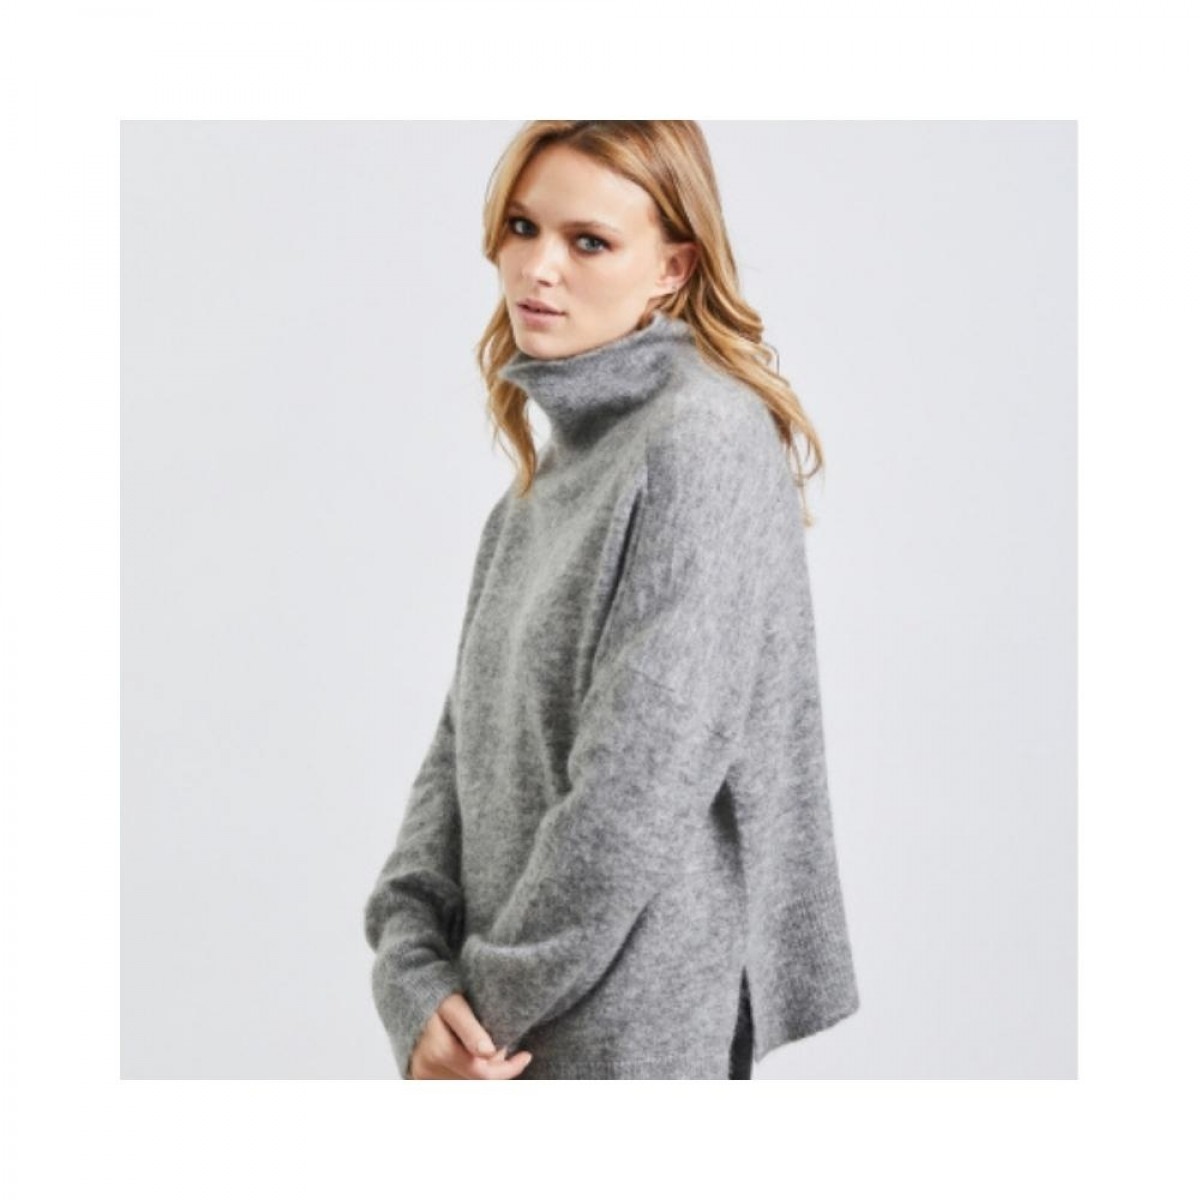 knit kayh - grey - fra siden 